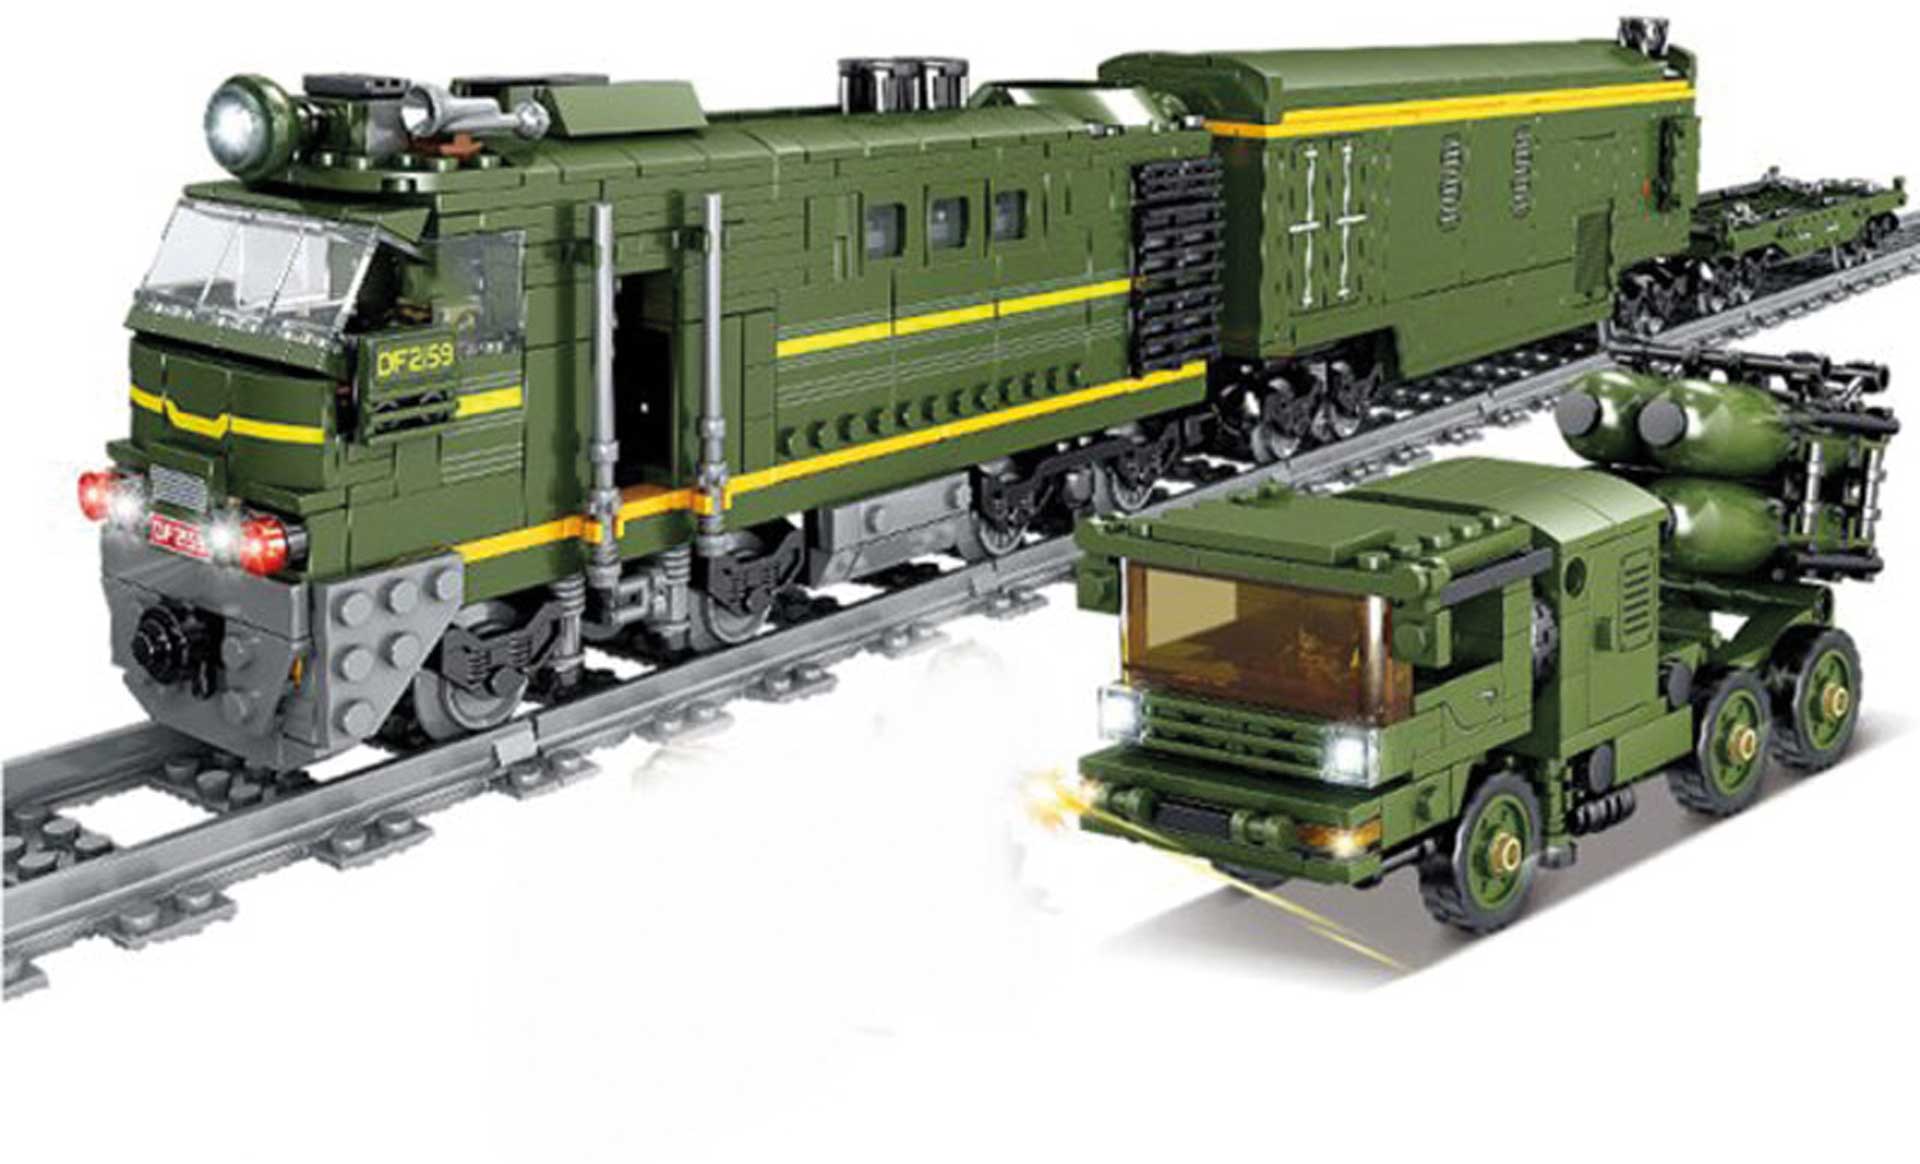 KAZI Military diesel locomotive DF2159 with rail circle clamping blocks